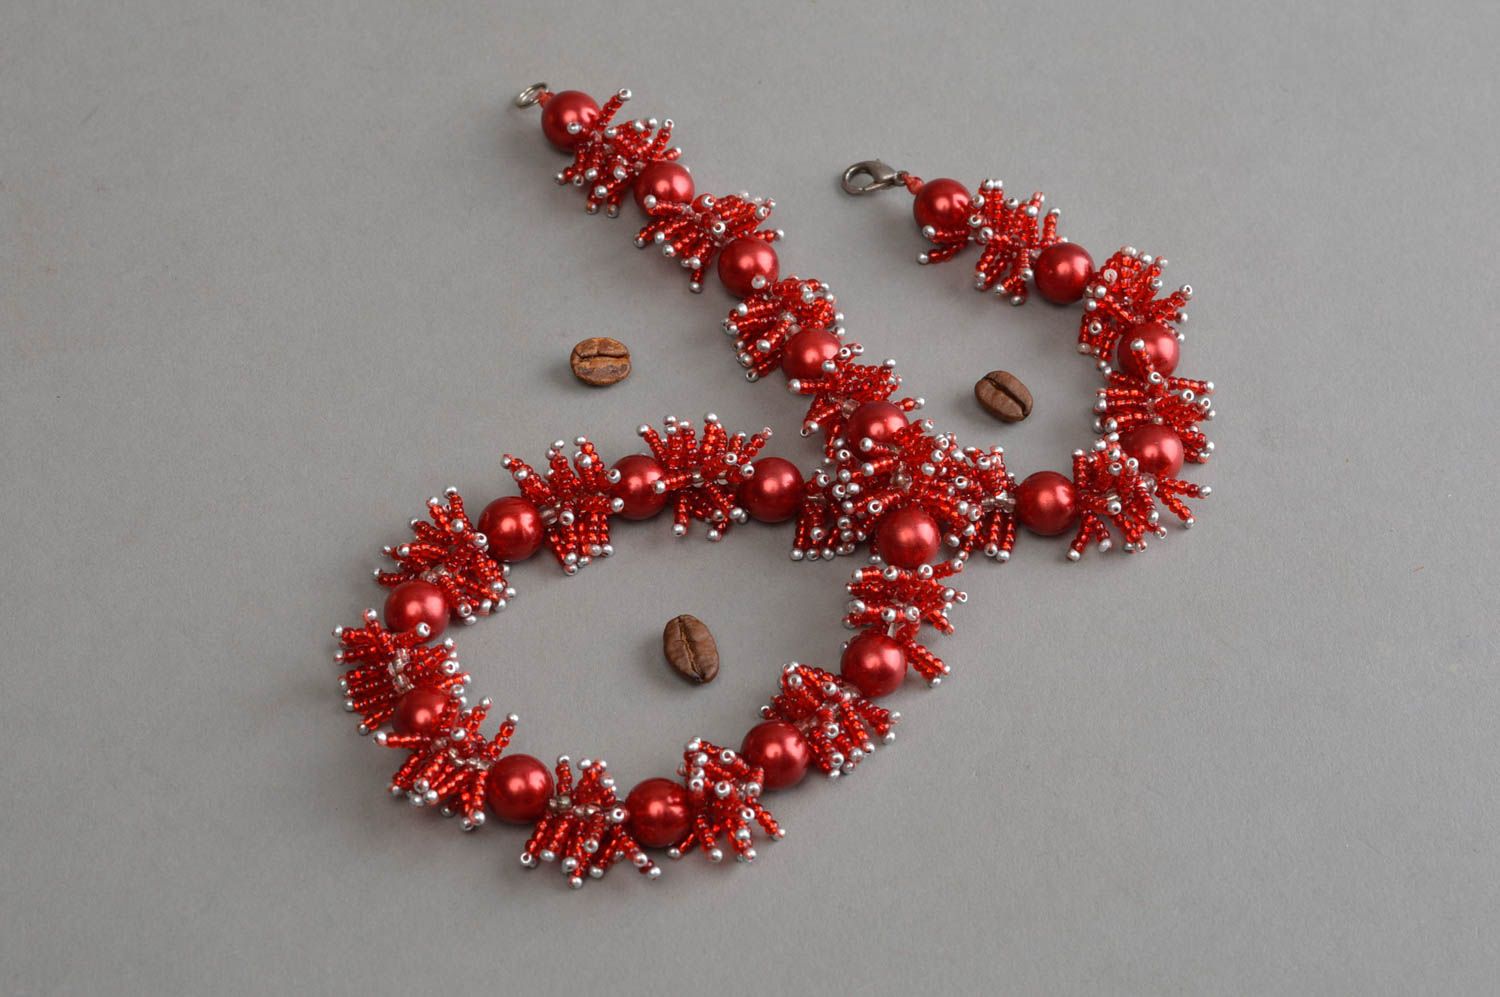 Stylish homemade beaded necklace designer evening jewelry bead weaving ideas photo 1